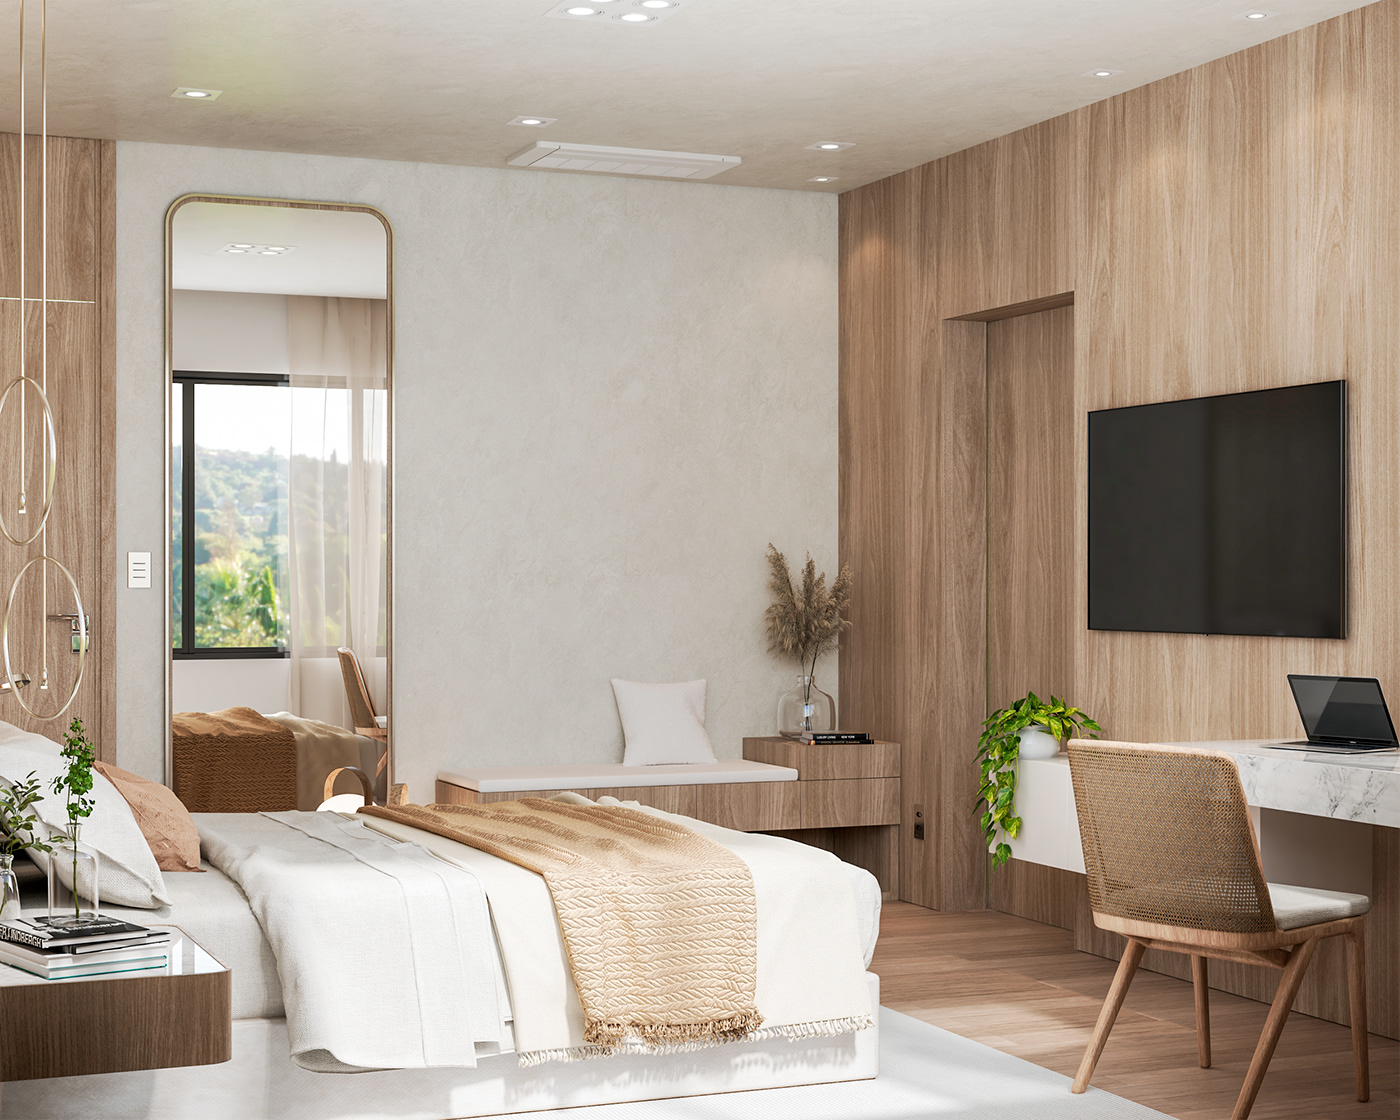 bedroomdesign interiordesign INTERIORDESIGNOFFICE INTIMATEAREADESIGN livingdesign STUDIOZATRE